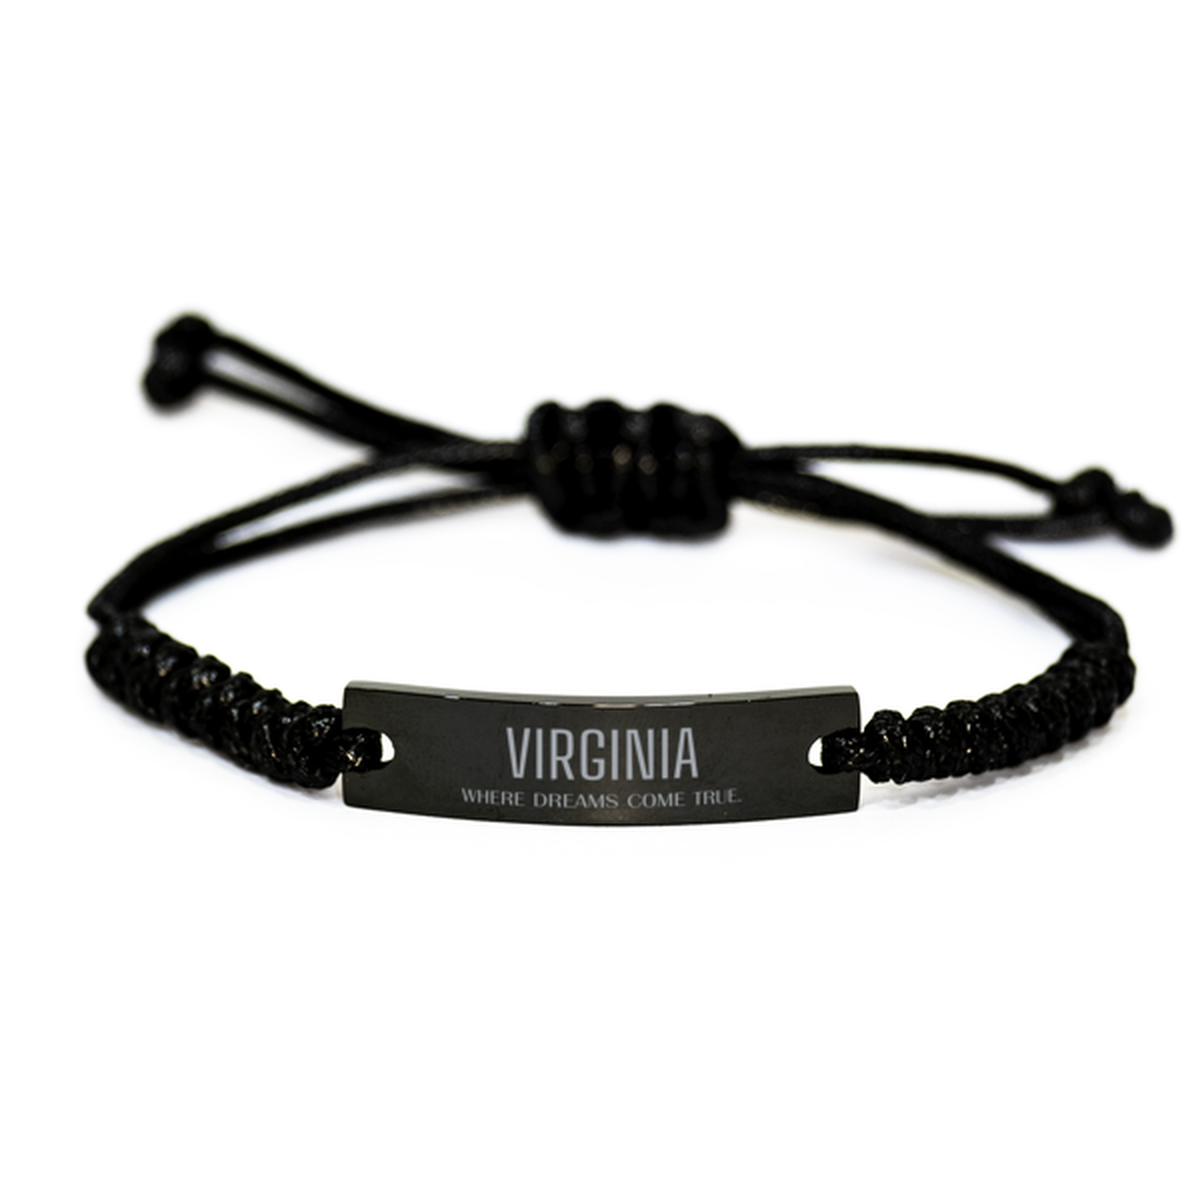 Love Virginia State Black Rope Bracelet, Virginia Where dreams come true, Birthday Inspirational Gifts For Virginia Men, Women, Friends